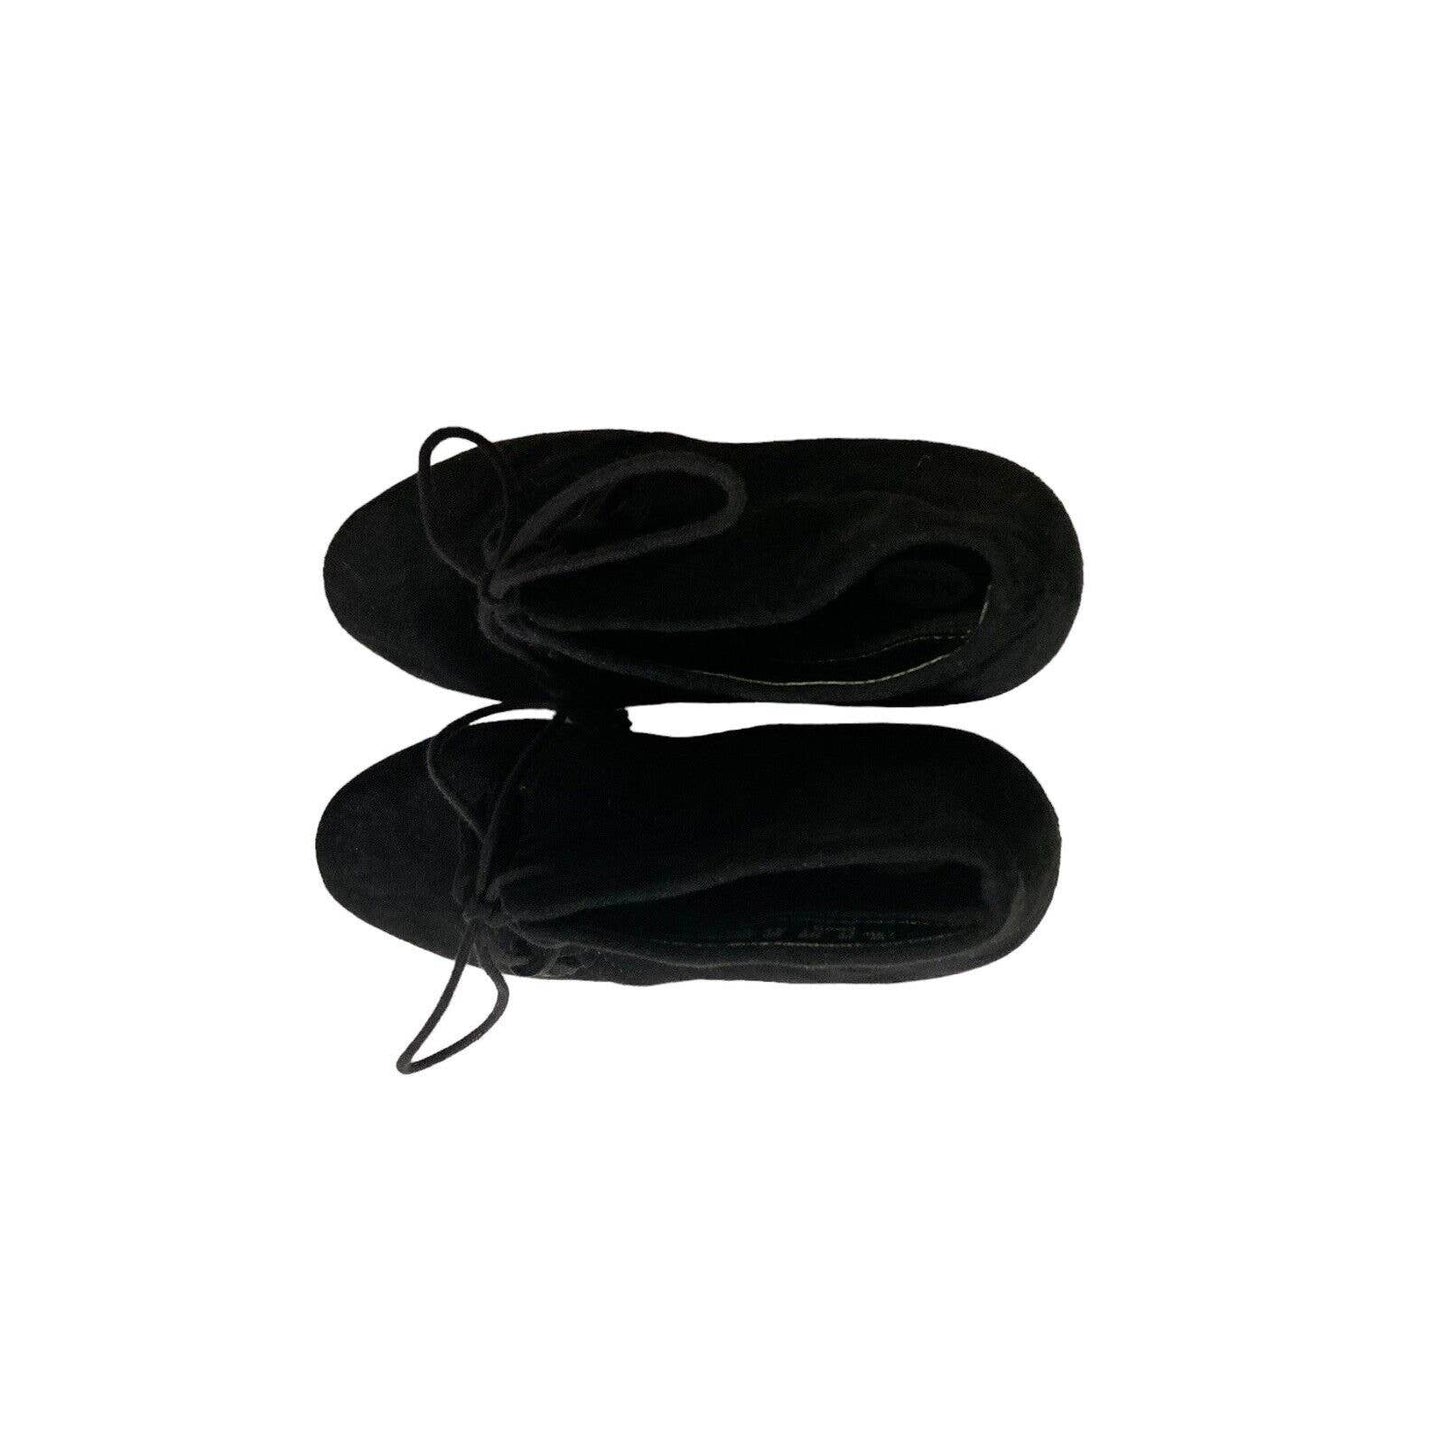 Dr Scholls Boots Dakota Desert Ankle Bootie Lace Up Wedge Black Suede 7.5 W